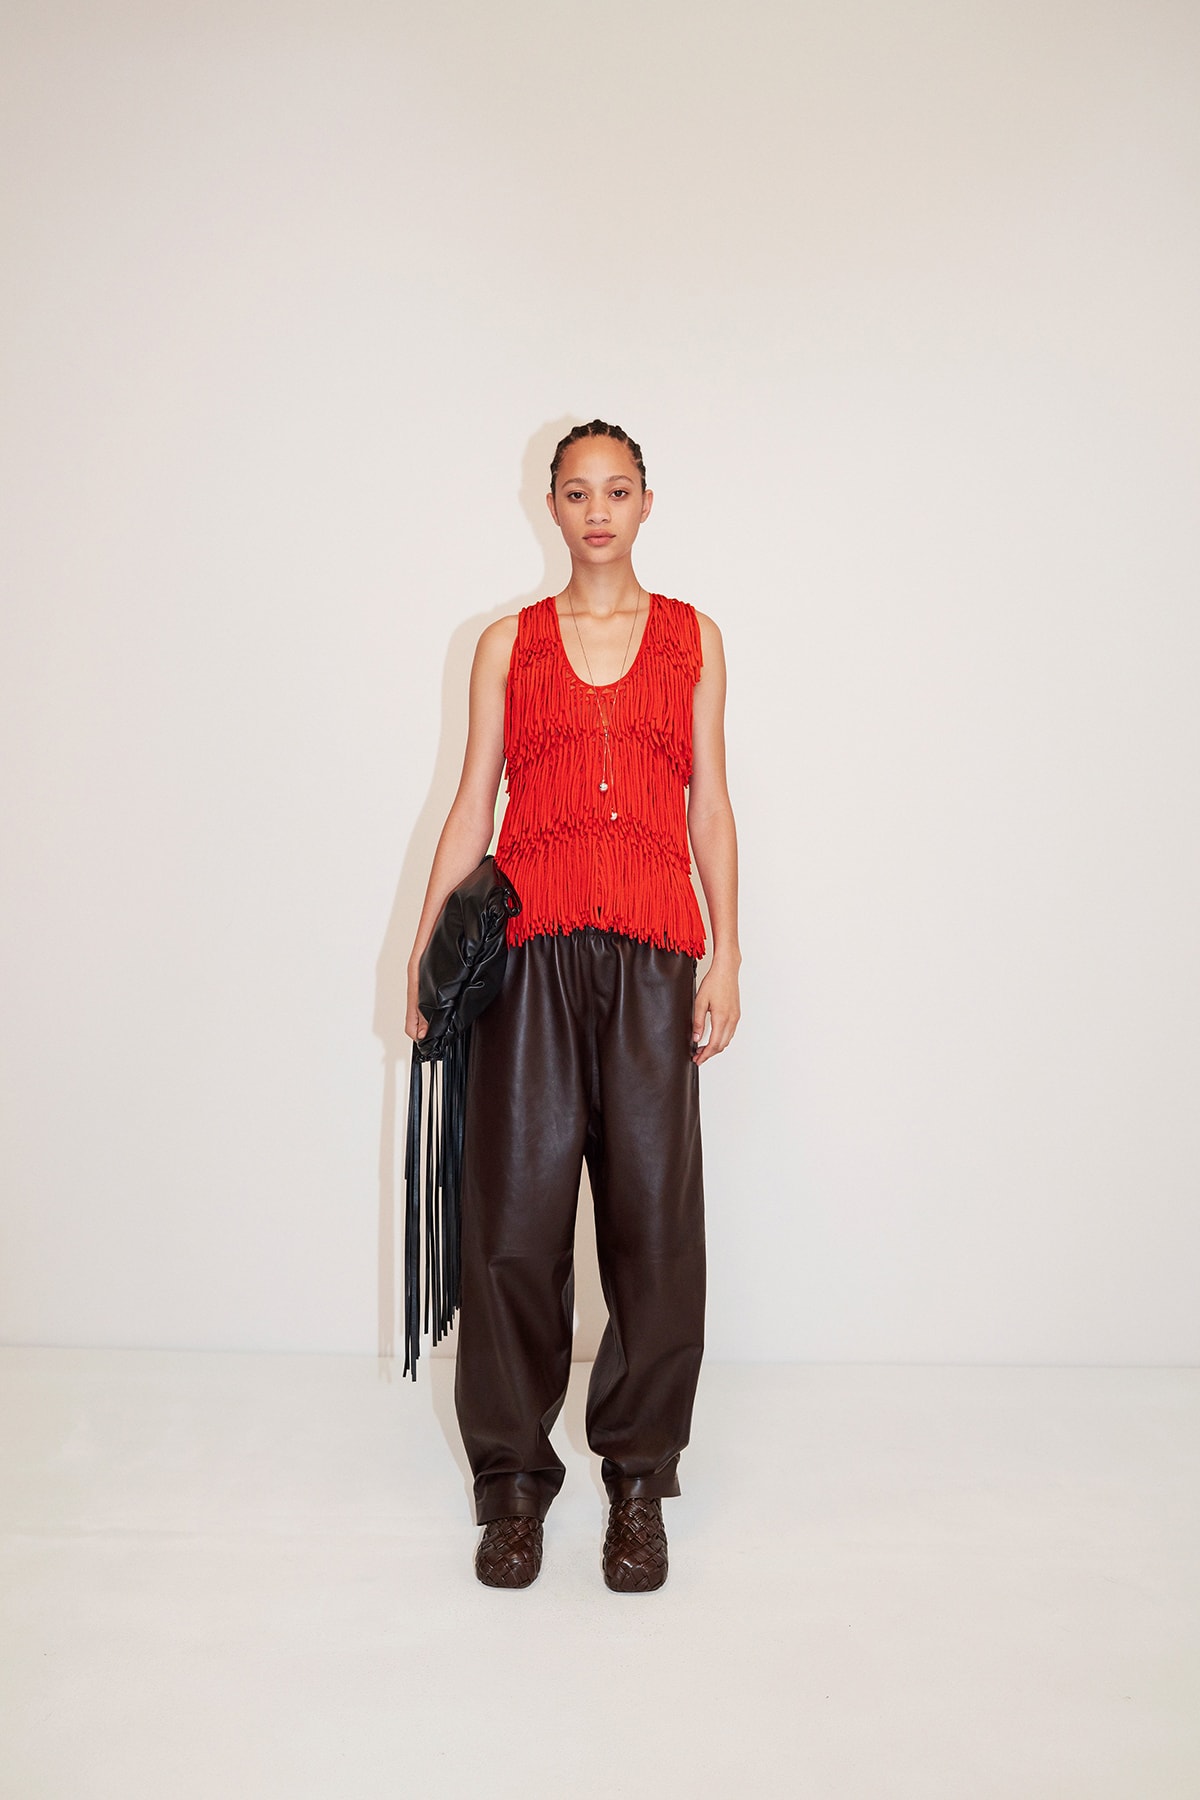 Bottega Veneta Pre-Fall 2020 Collection Lookbook Woven Top Red Leather Pants